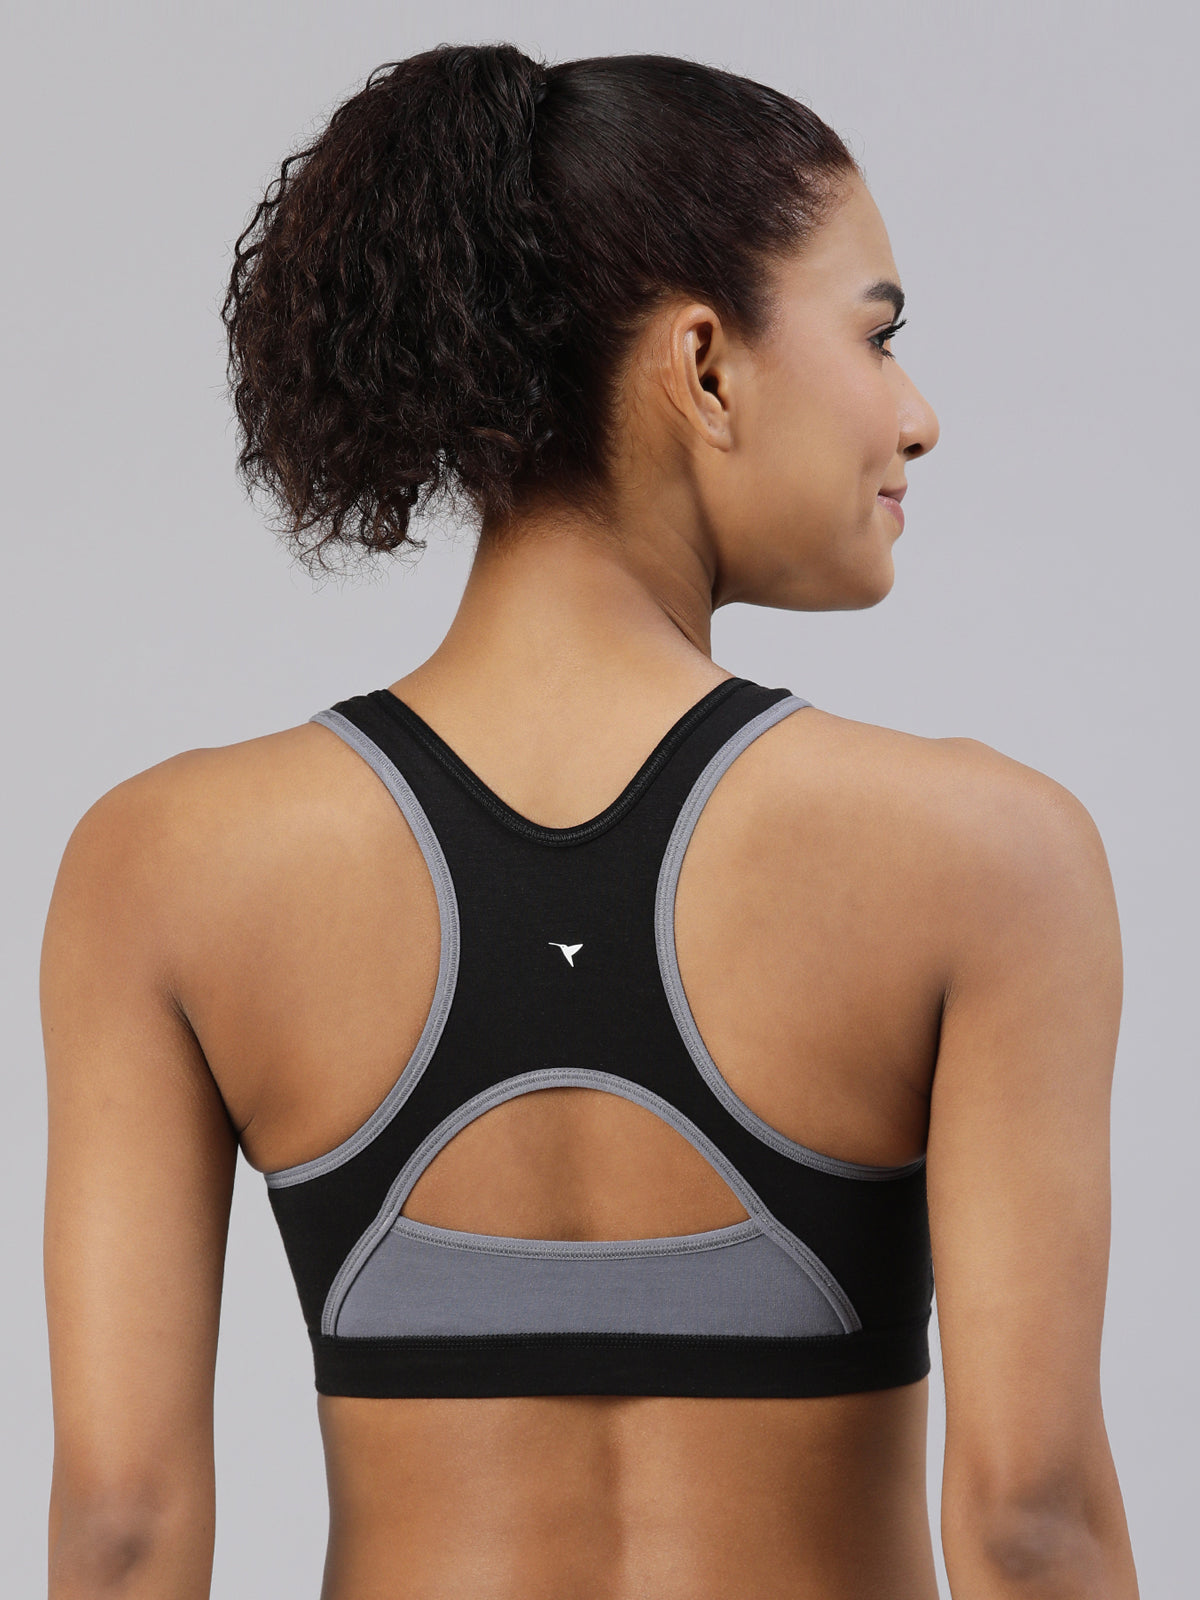 blossom-workout bra-black3-Sports collection-utility based bra